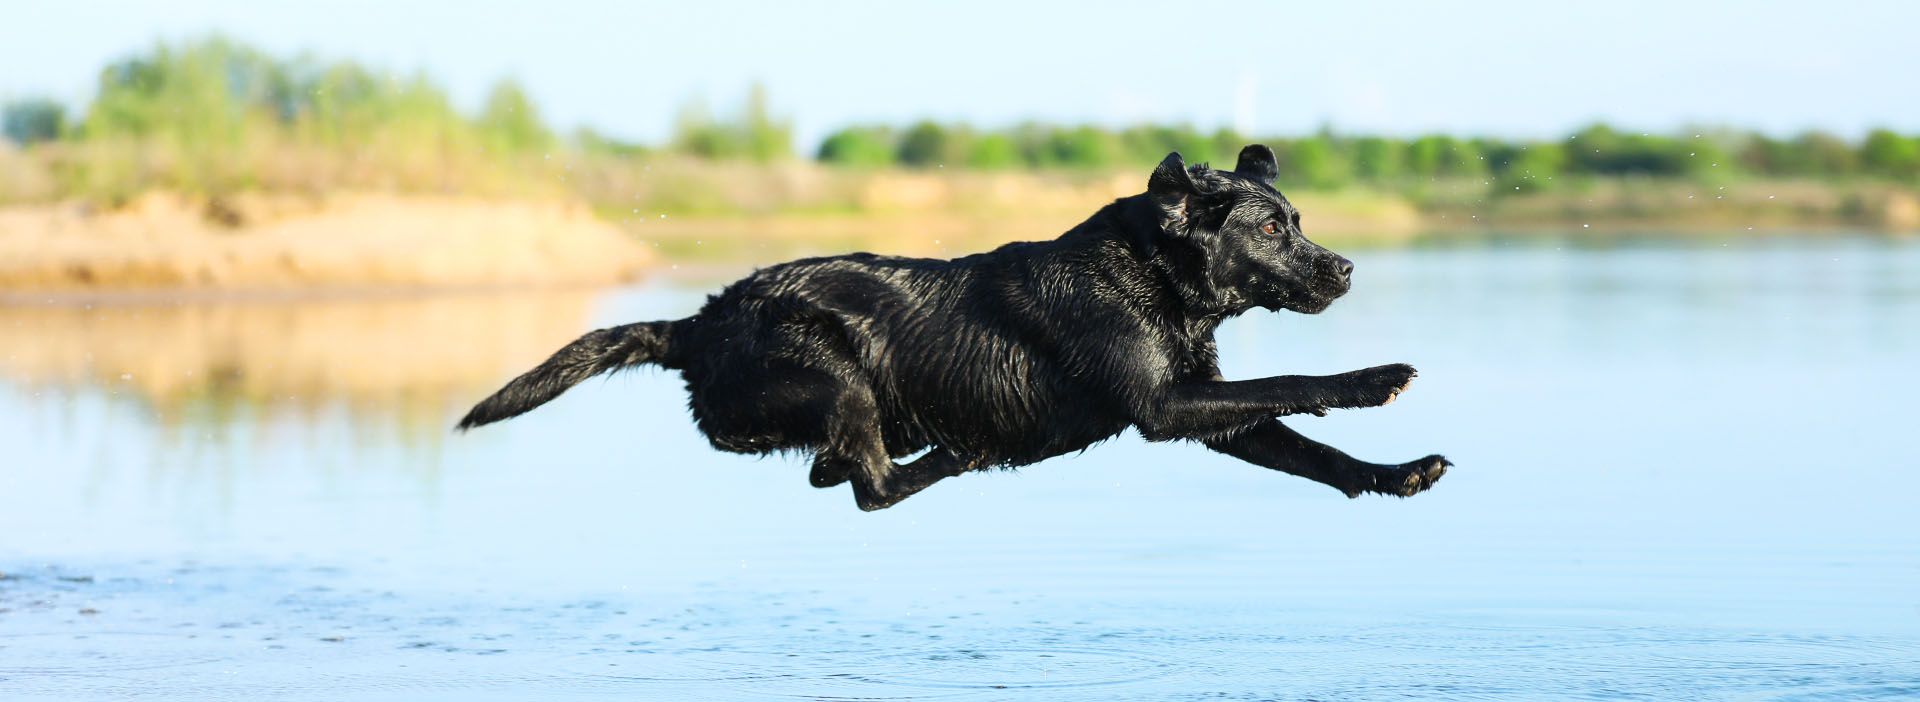 Hund springt in den See